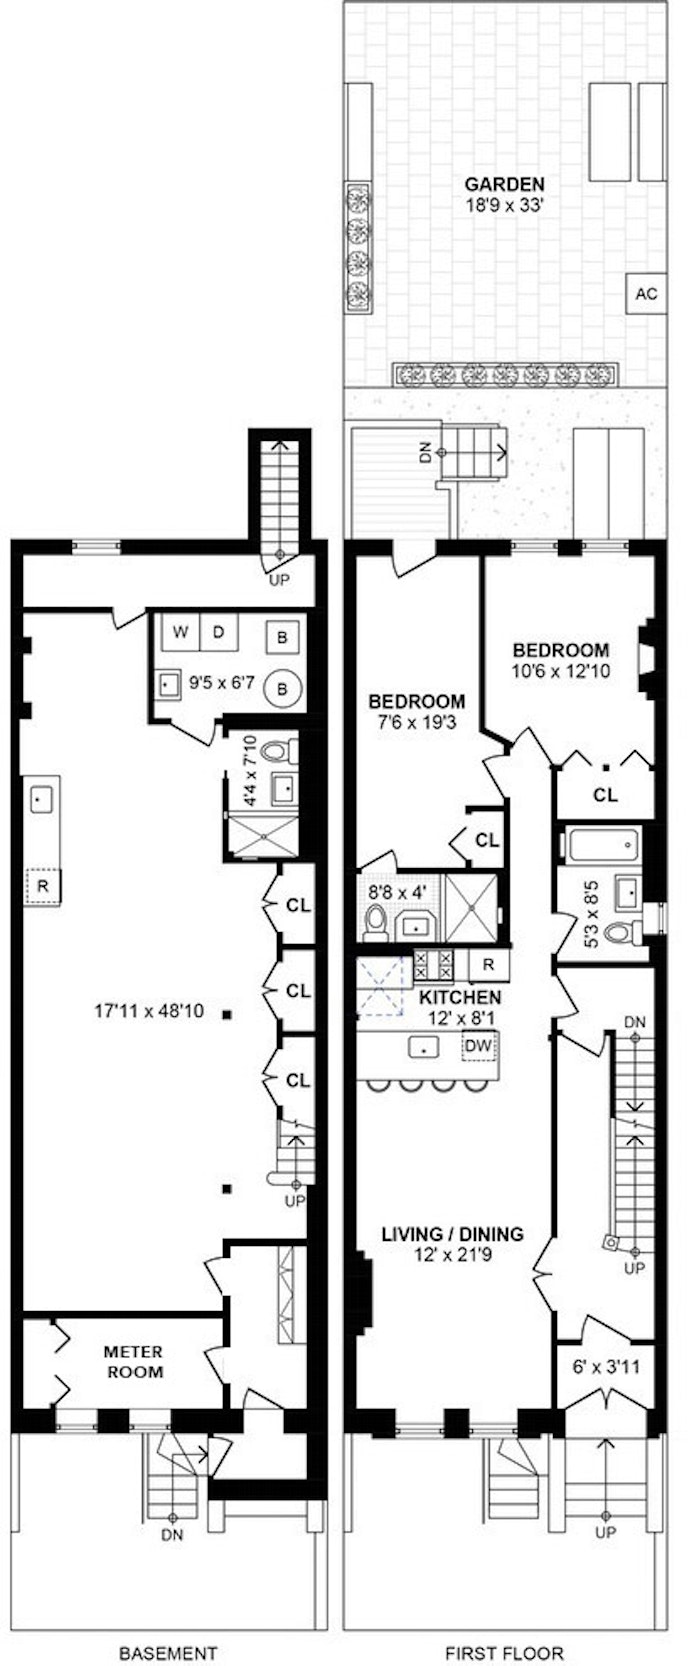 Floorplan for 211A 9th Street, 1